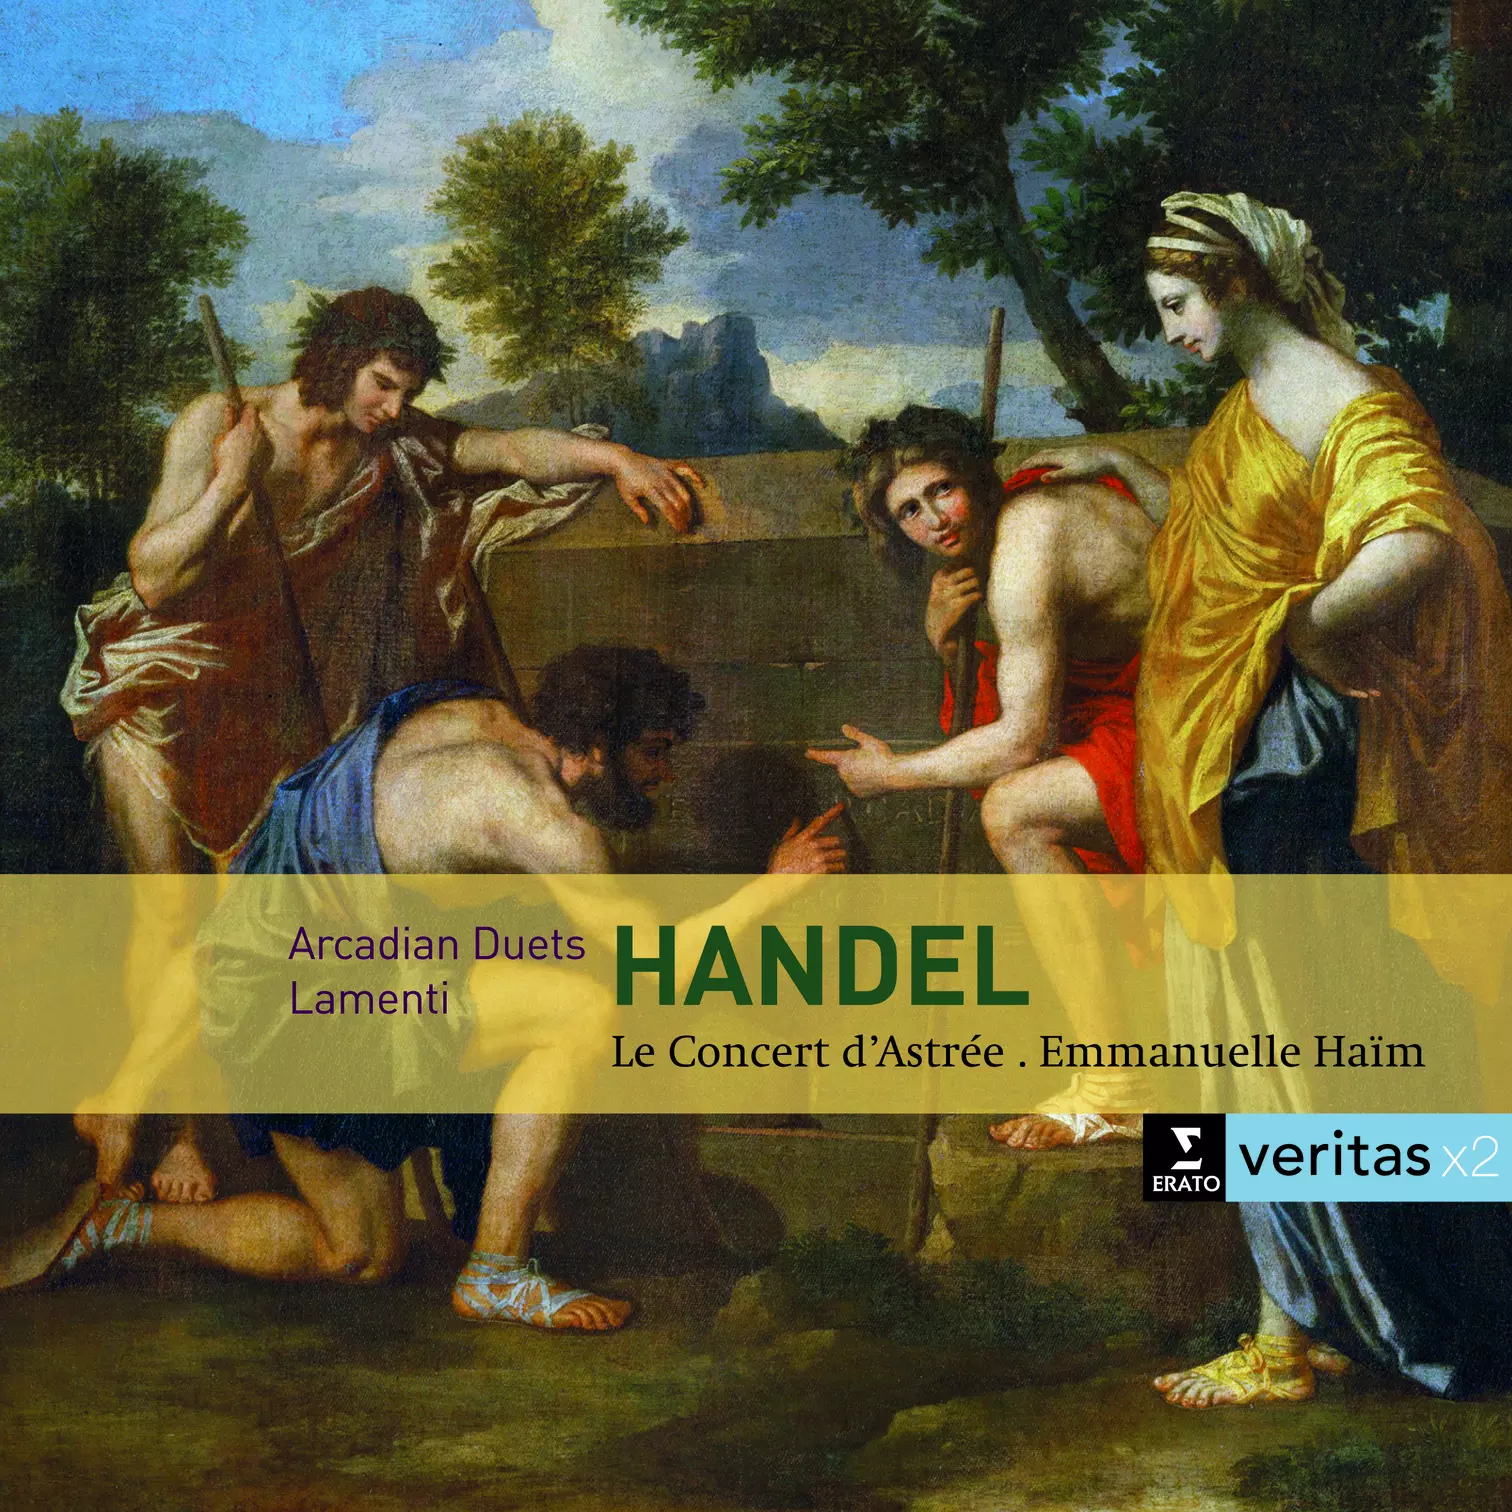 Handel: Arcadian Duets, Lamenti